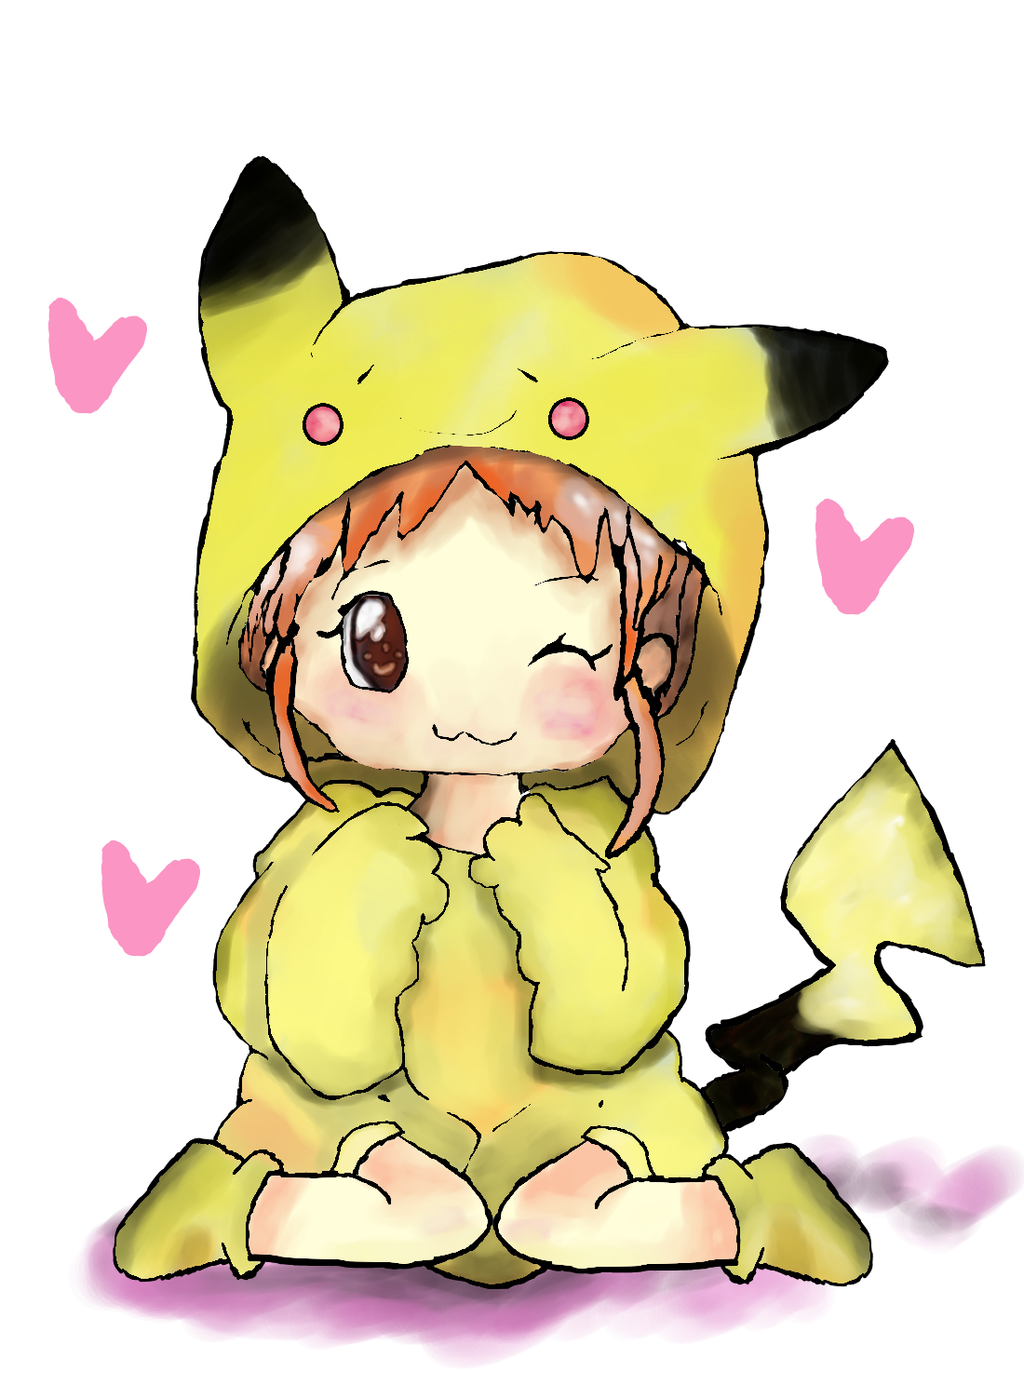 Chibi Pikachu Girl by Sen-Draw on DeviantArt